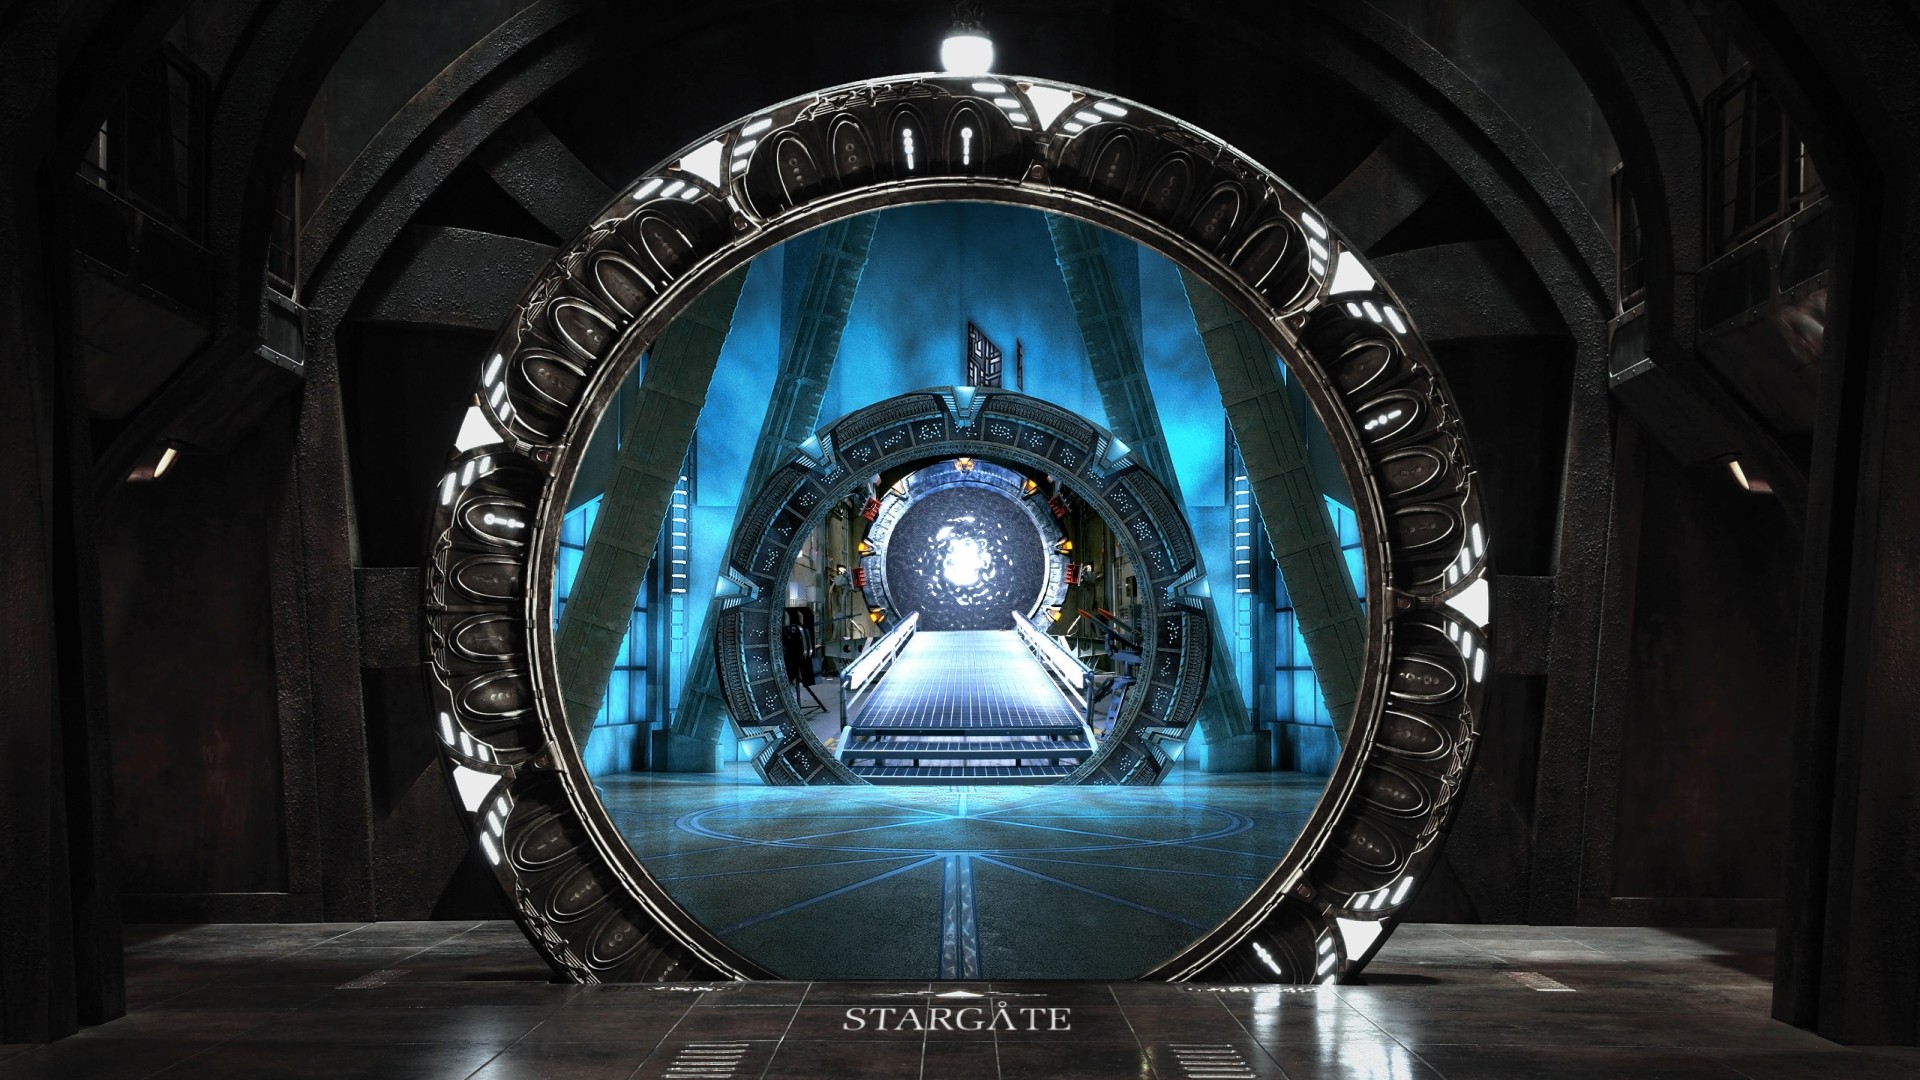 Stargate Wallpaper by PZNS on DeviantArt